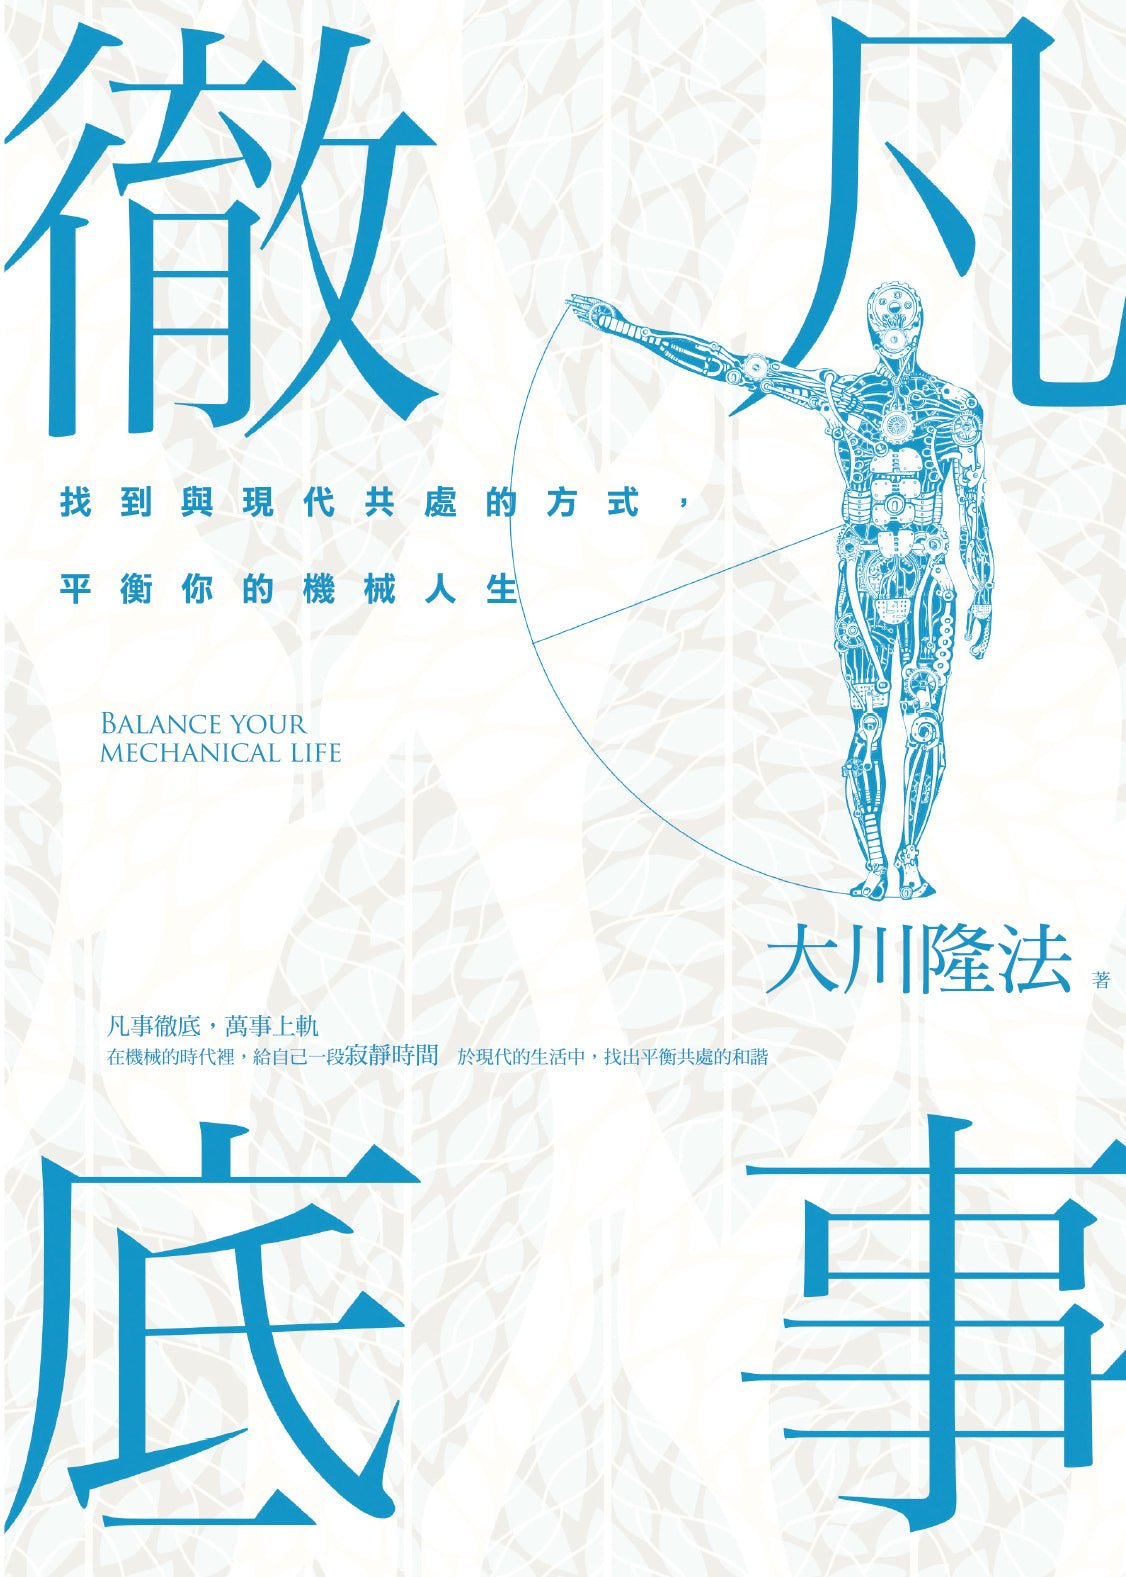 Book, The Power of Basics : Introduction to Modern Zen Life of Calm, Spirituality and Success, Ryuho Okawa, Chinese Traditional - IRH Press International